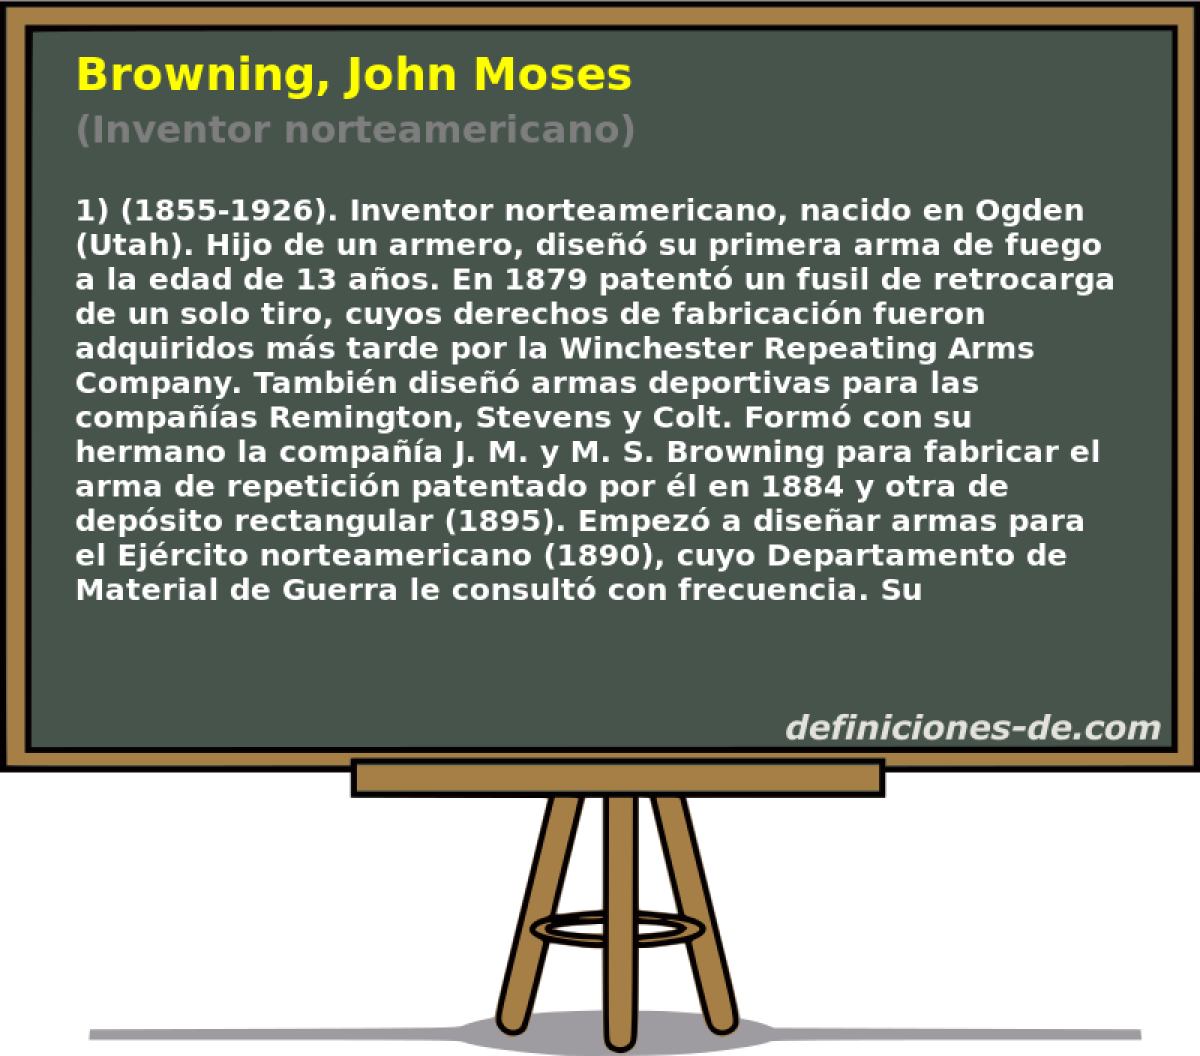 Browning, John Moses (Inventor norteamericano)